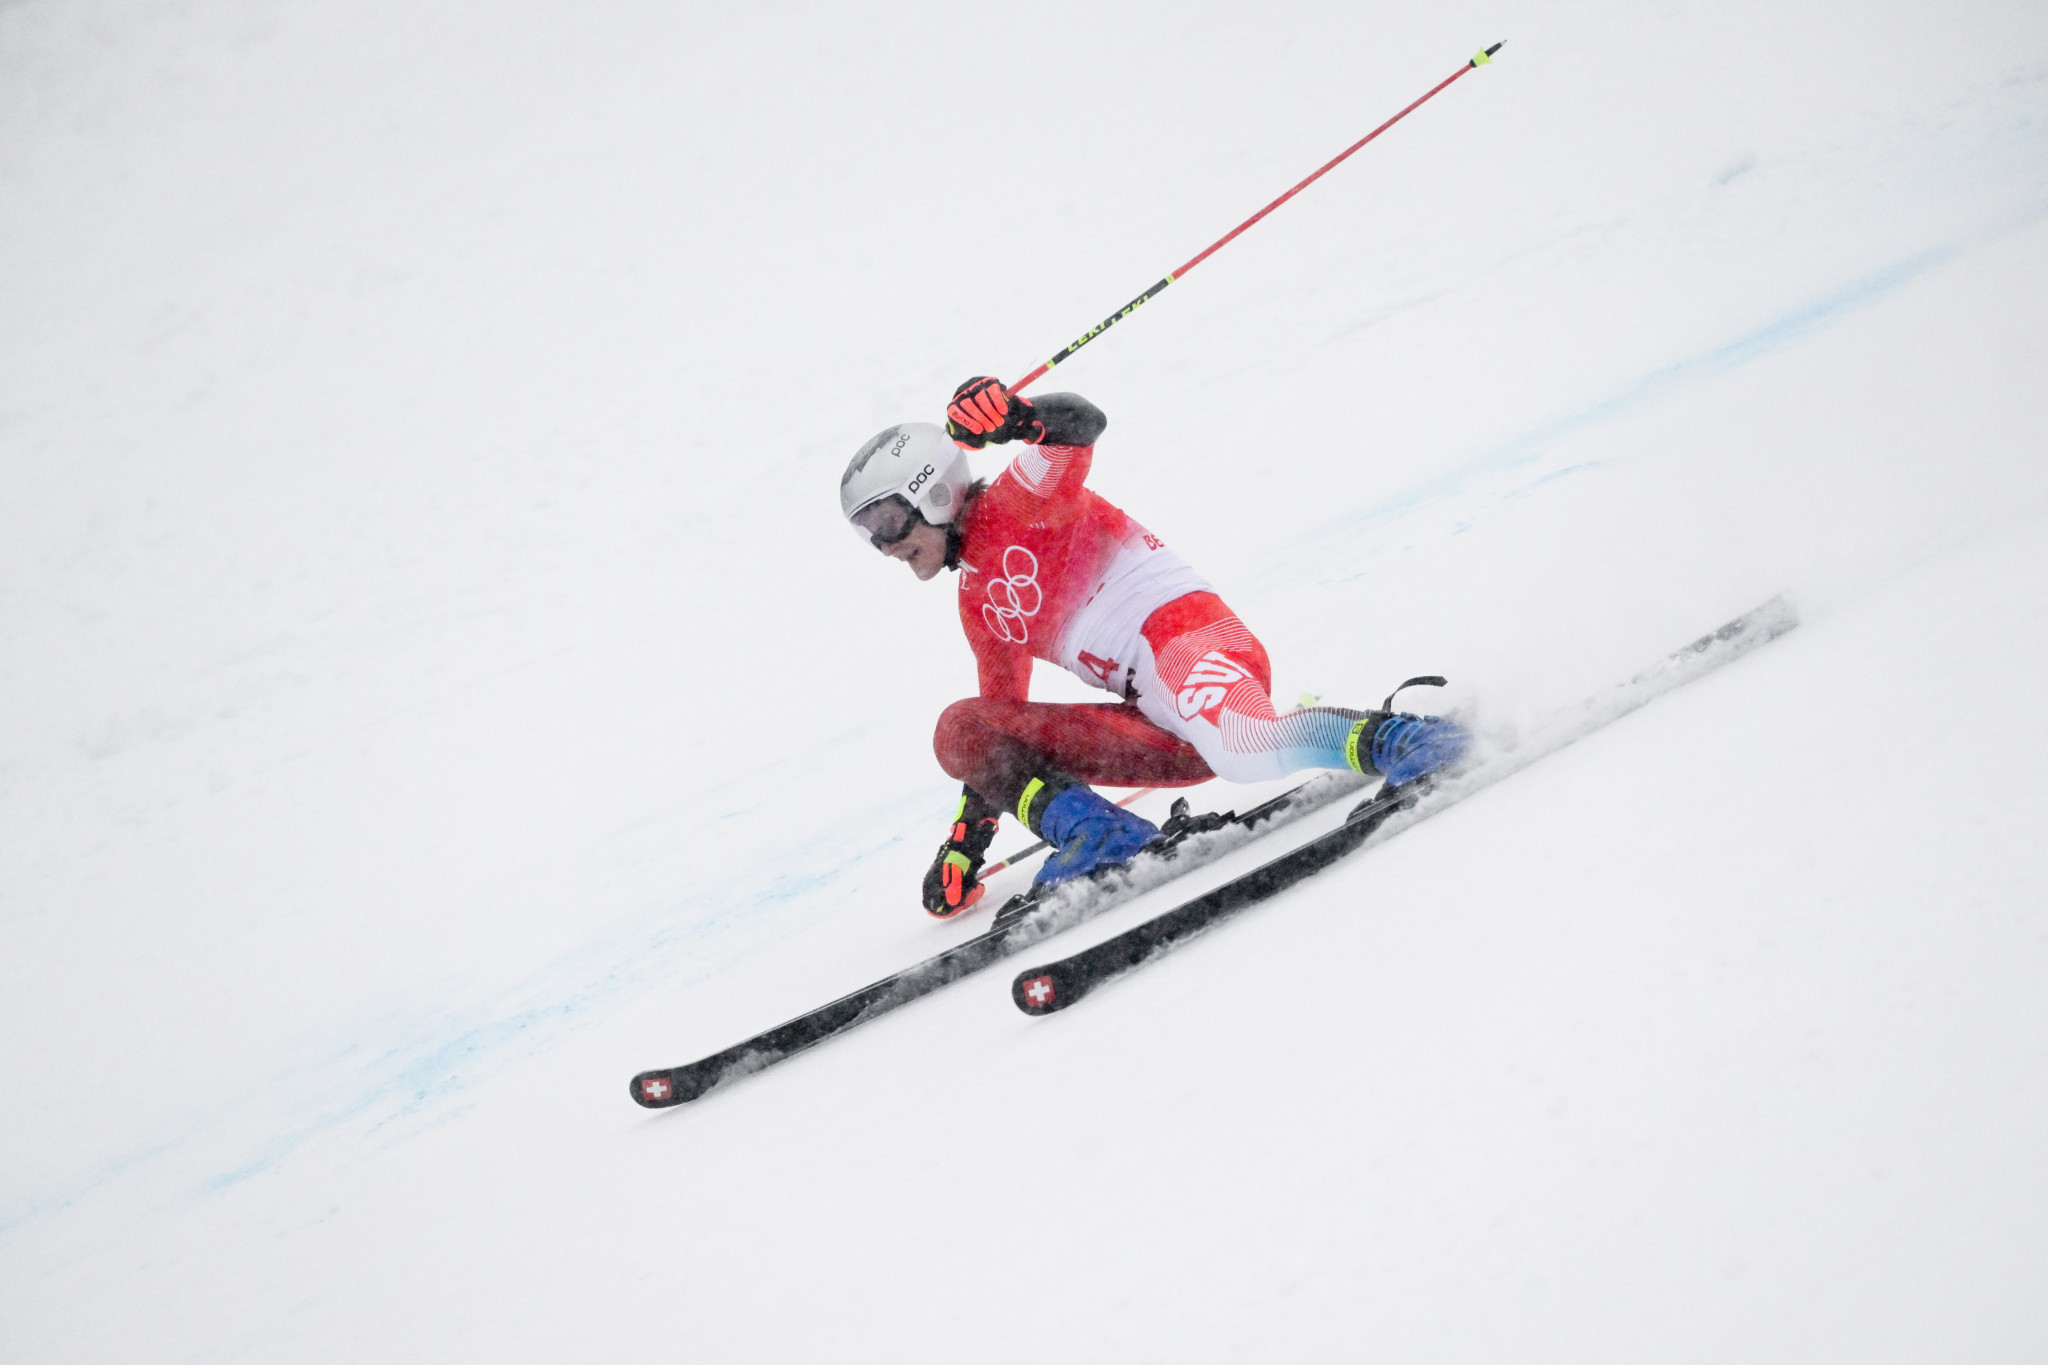 Marco Odermatt won again in the men's giant slalom ©Getty Images